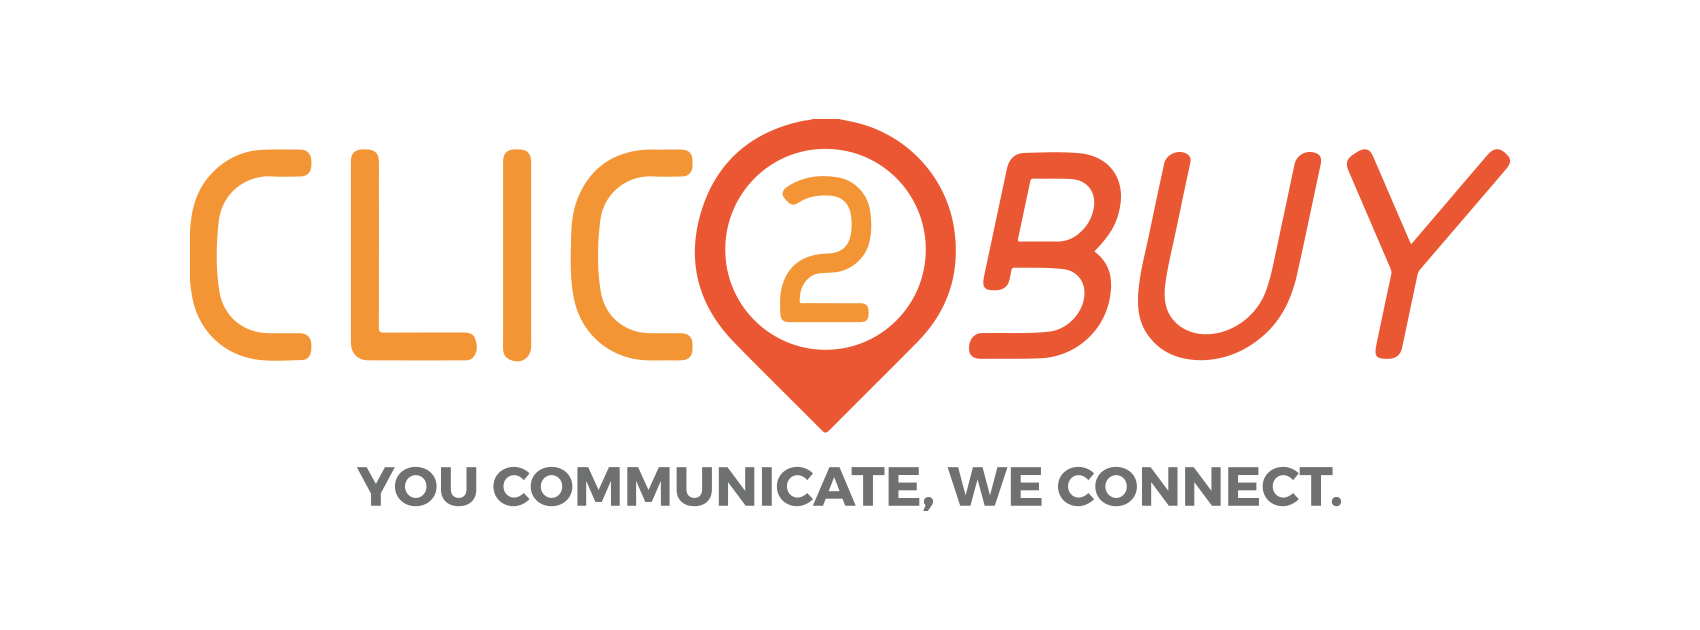 Buy.com Logo - Solution de Where to Buy pour vos supports de communication - Clic2Buy